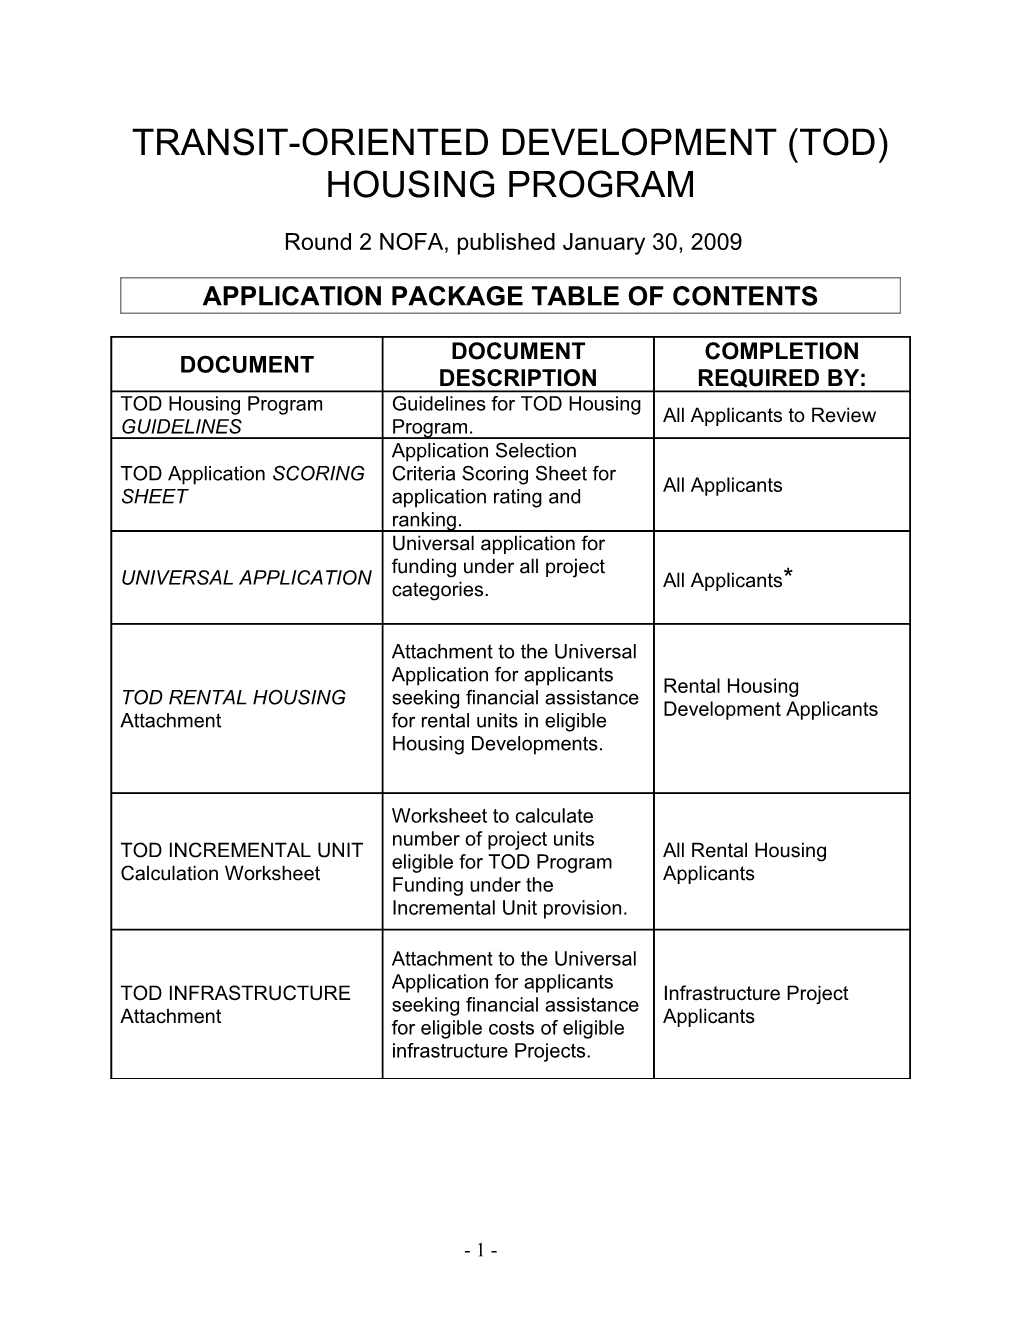 Transit-Oriented Development (Tod) Housing Program